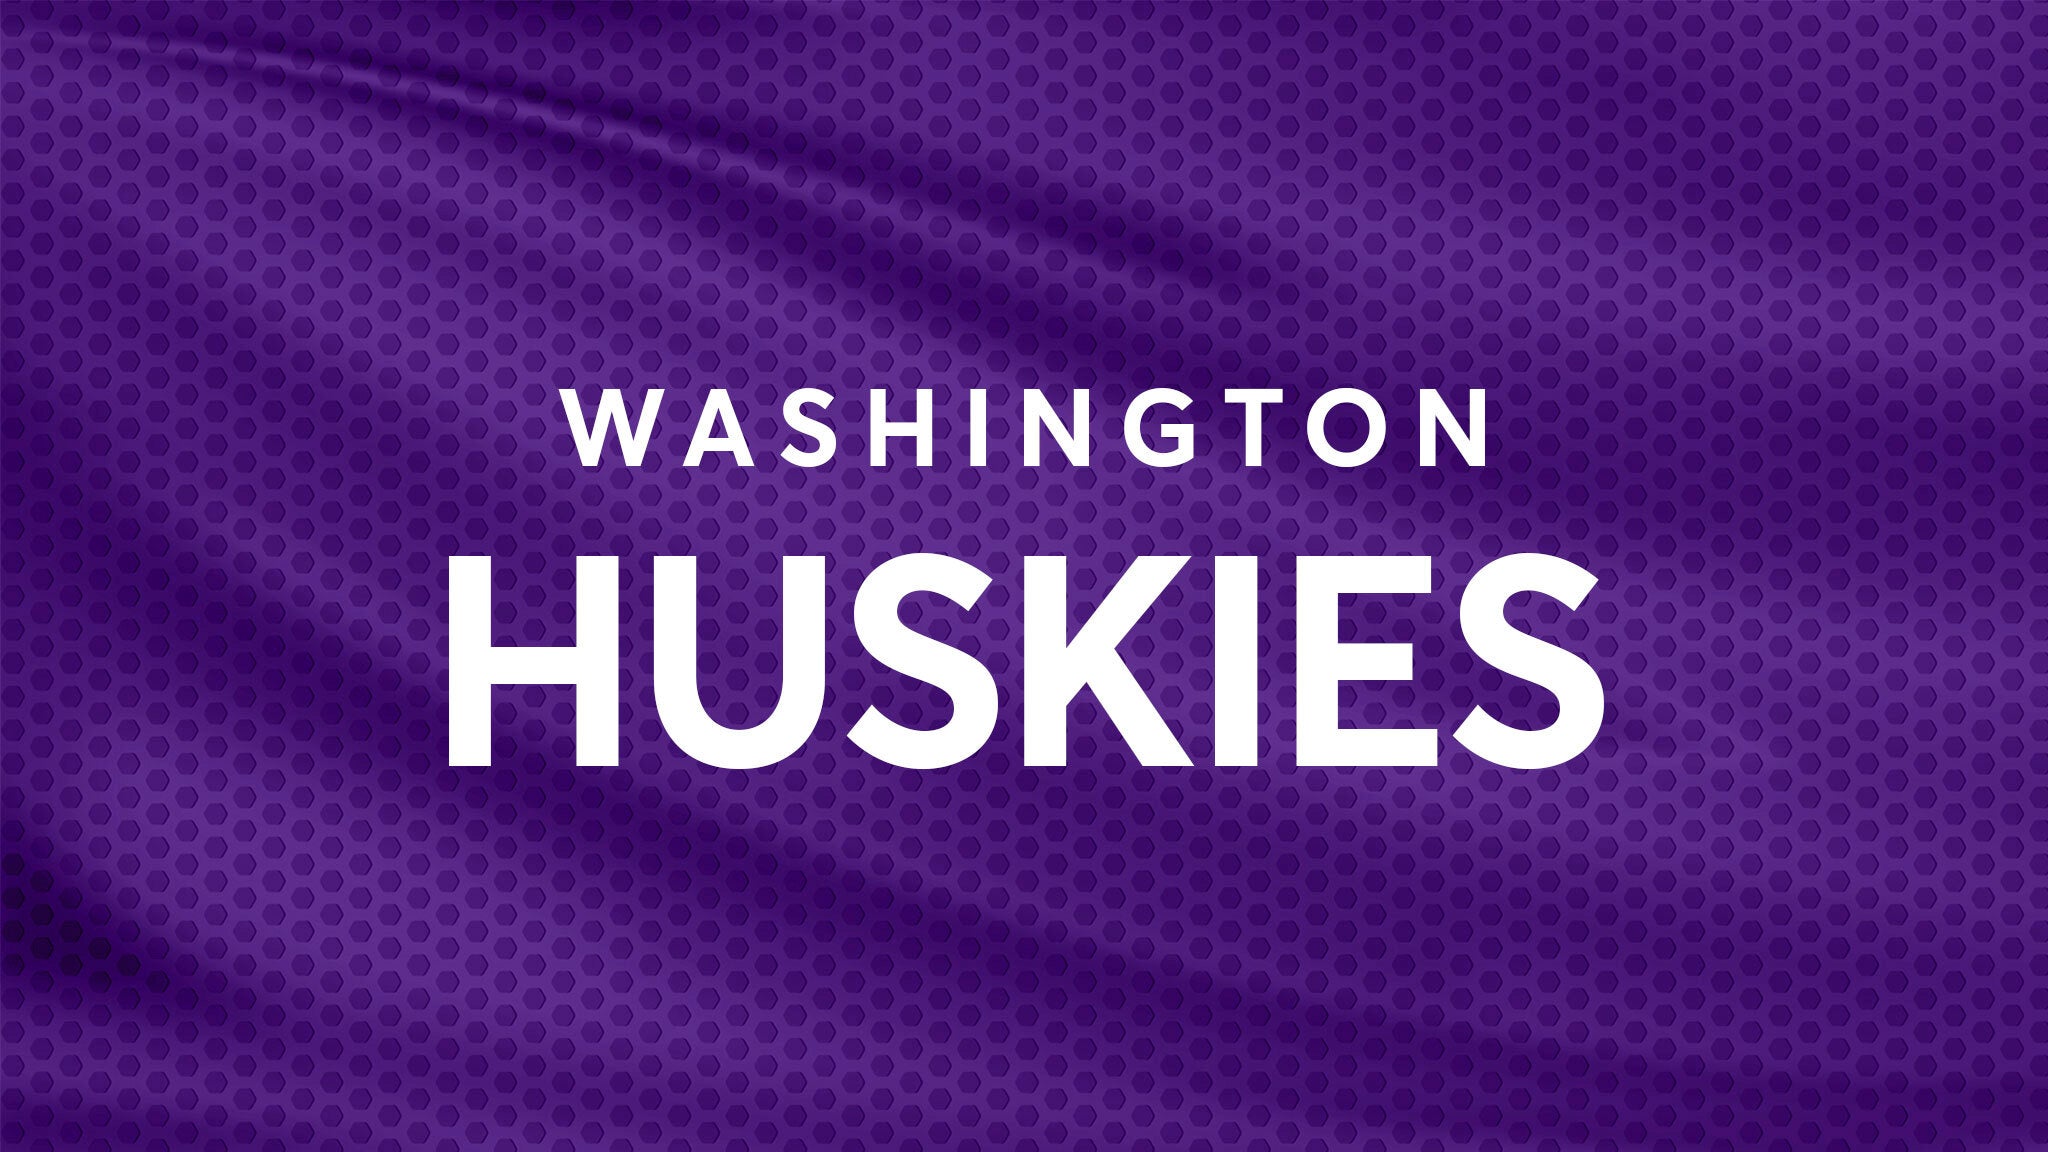 Washington Huskies Football vs. Northwestern Wildcats Football hero